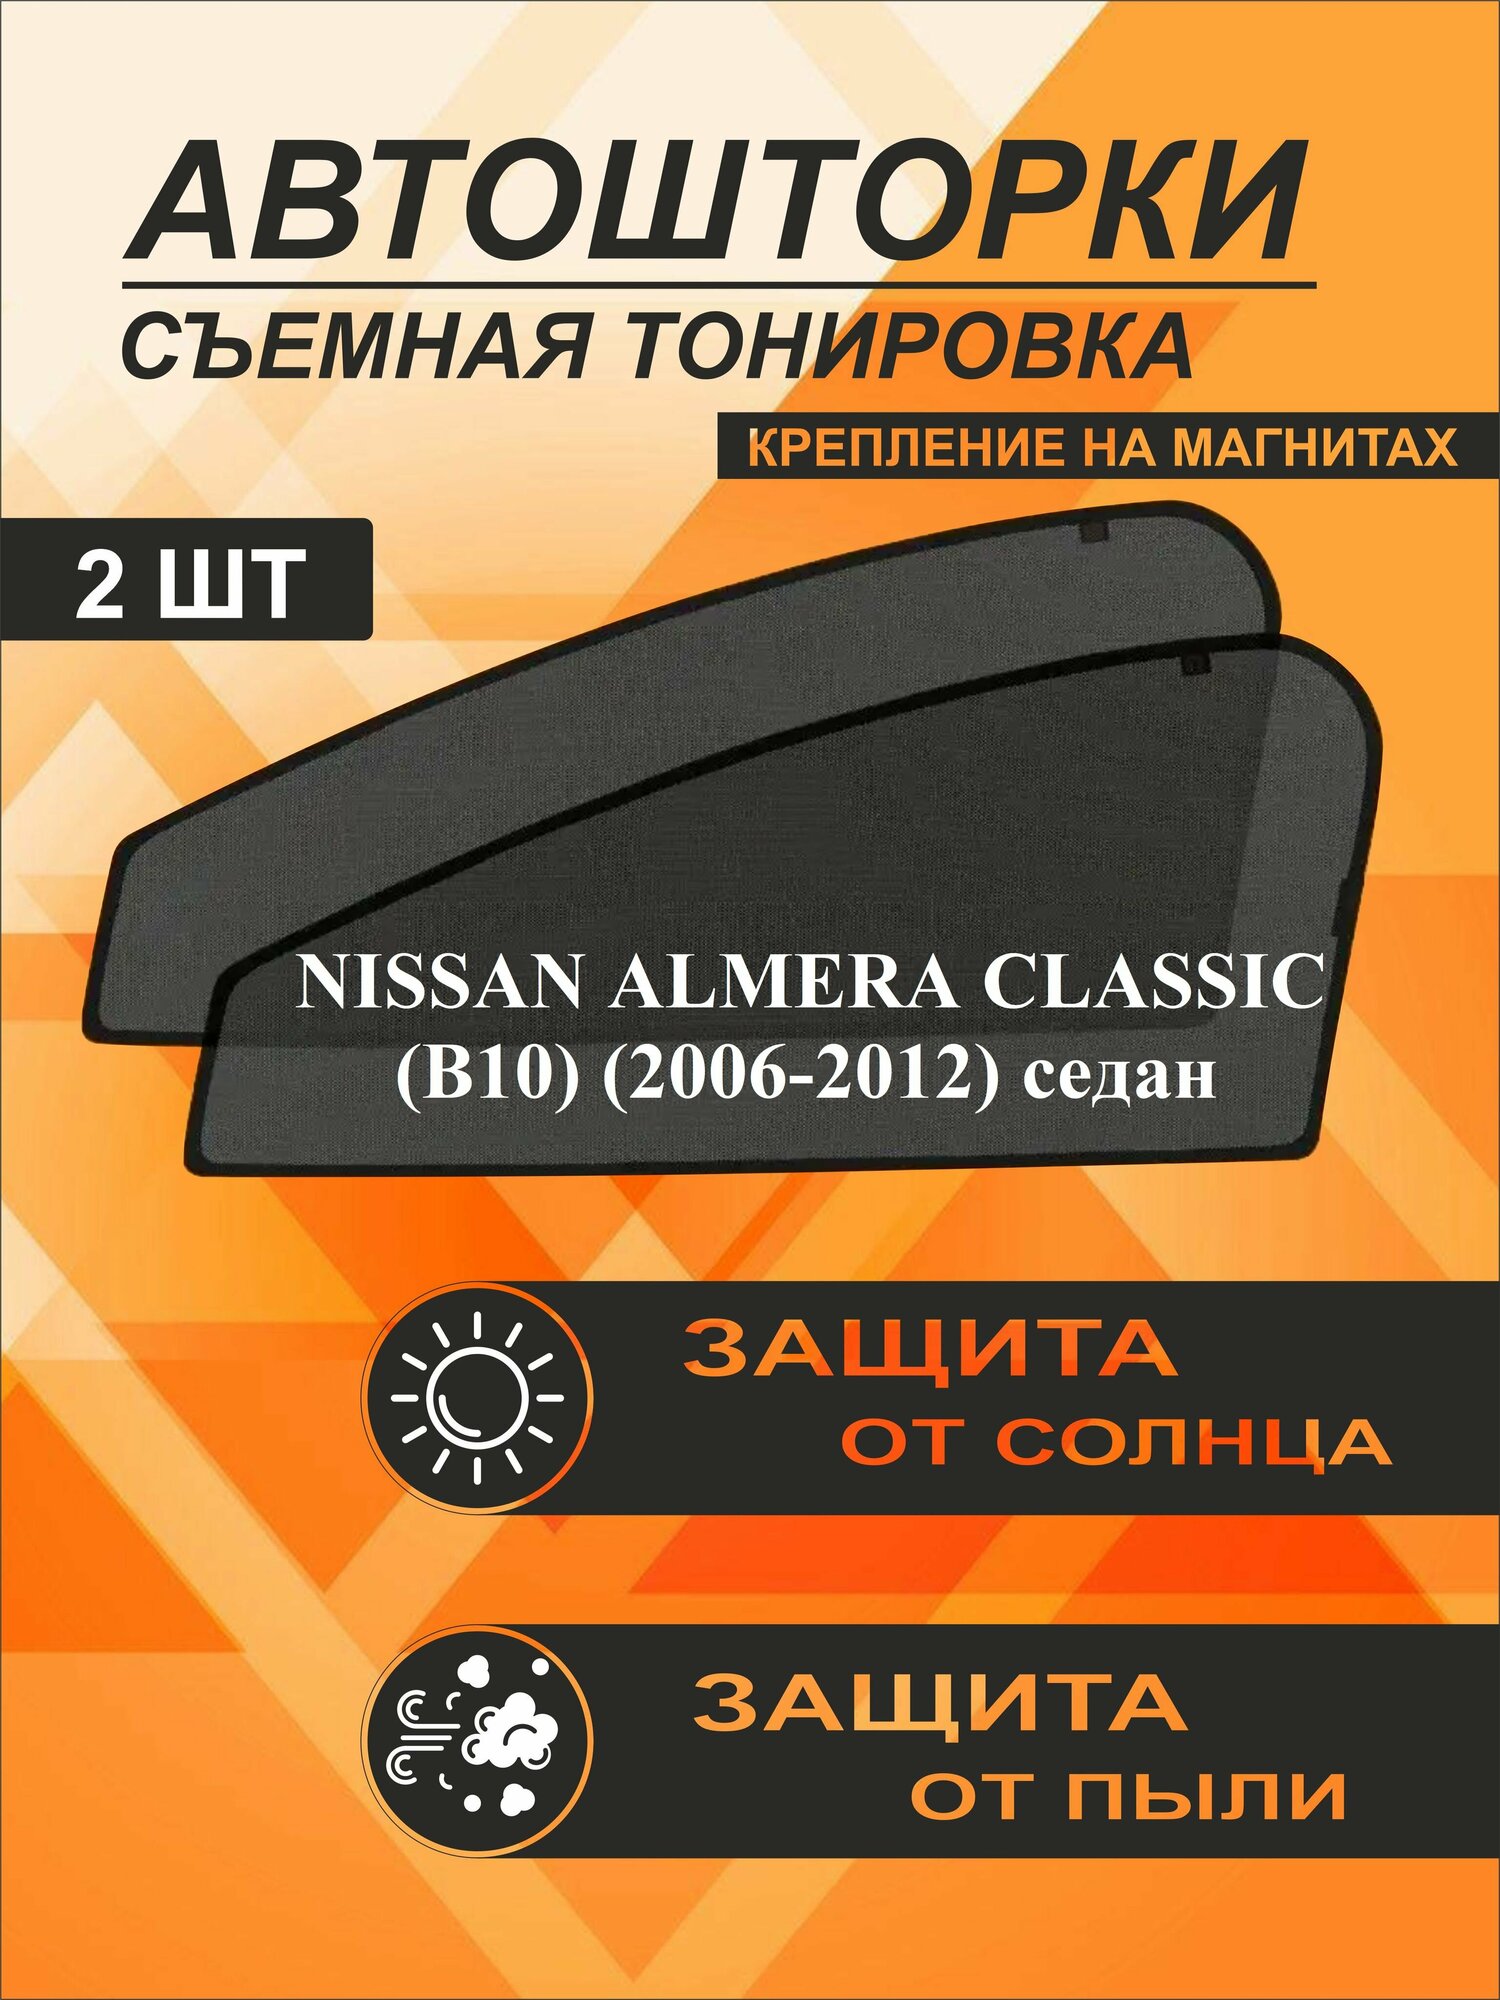 Автошторки на Nissan Almera Classic (B10)(2006-2012)